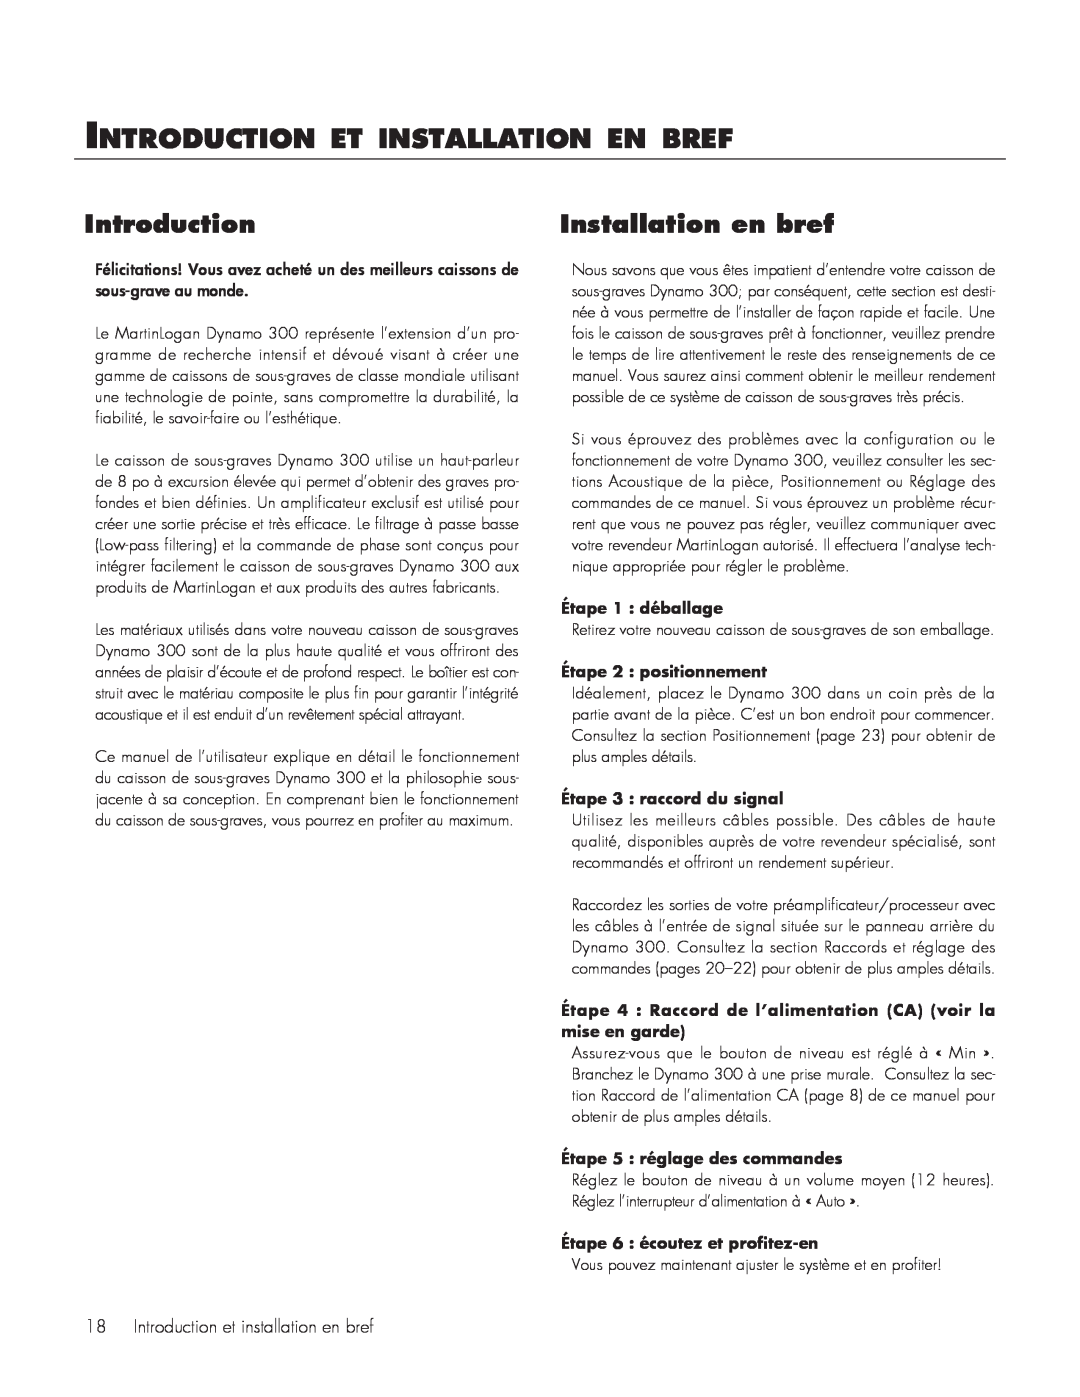 MartinLogan 300 user manual Introduction et installation en bref, Installation en bref 